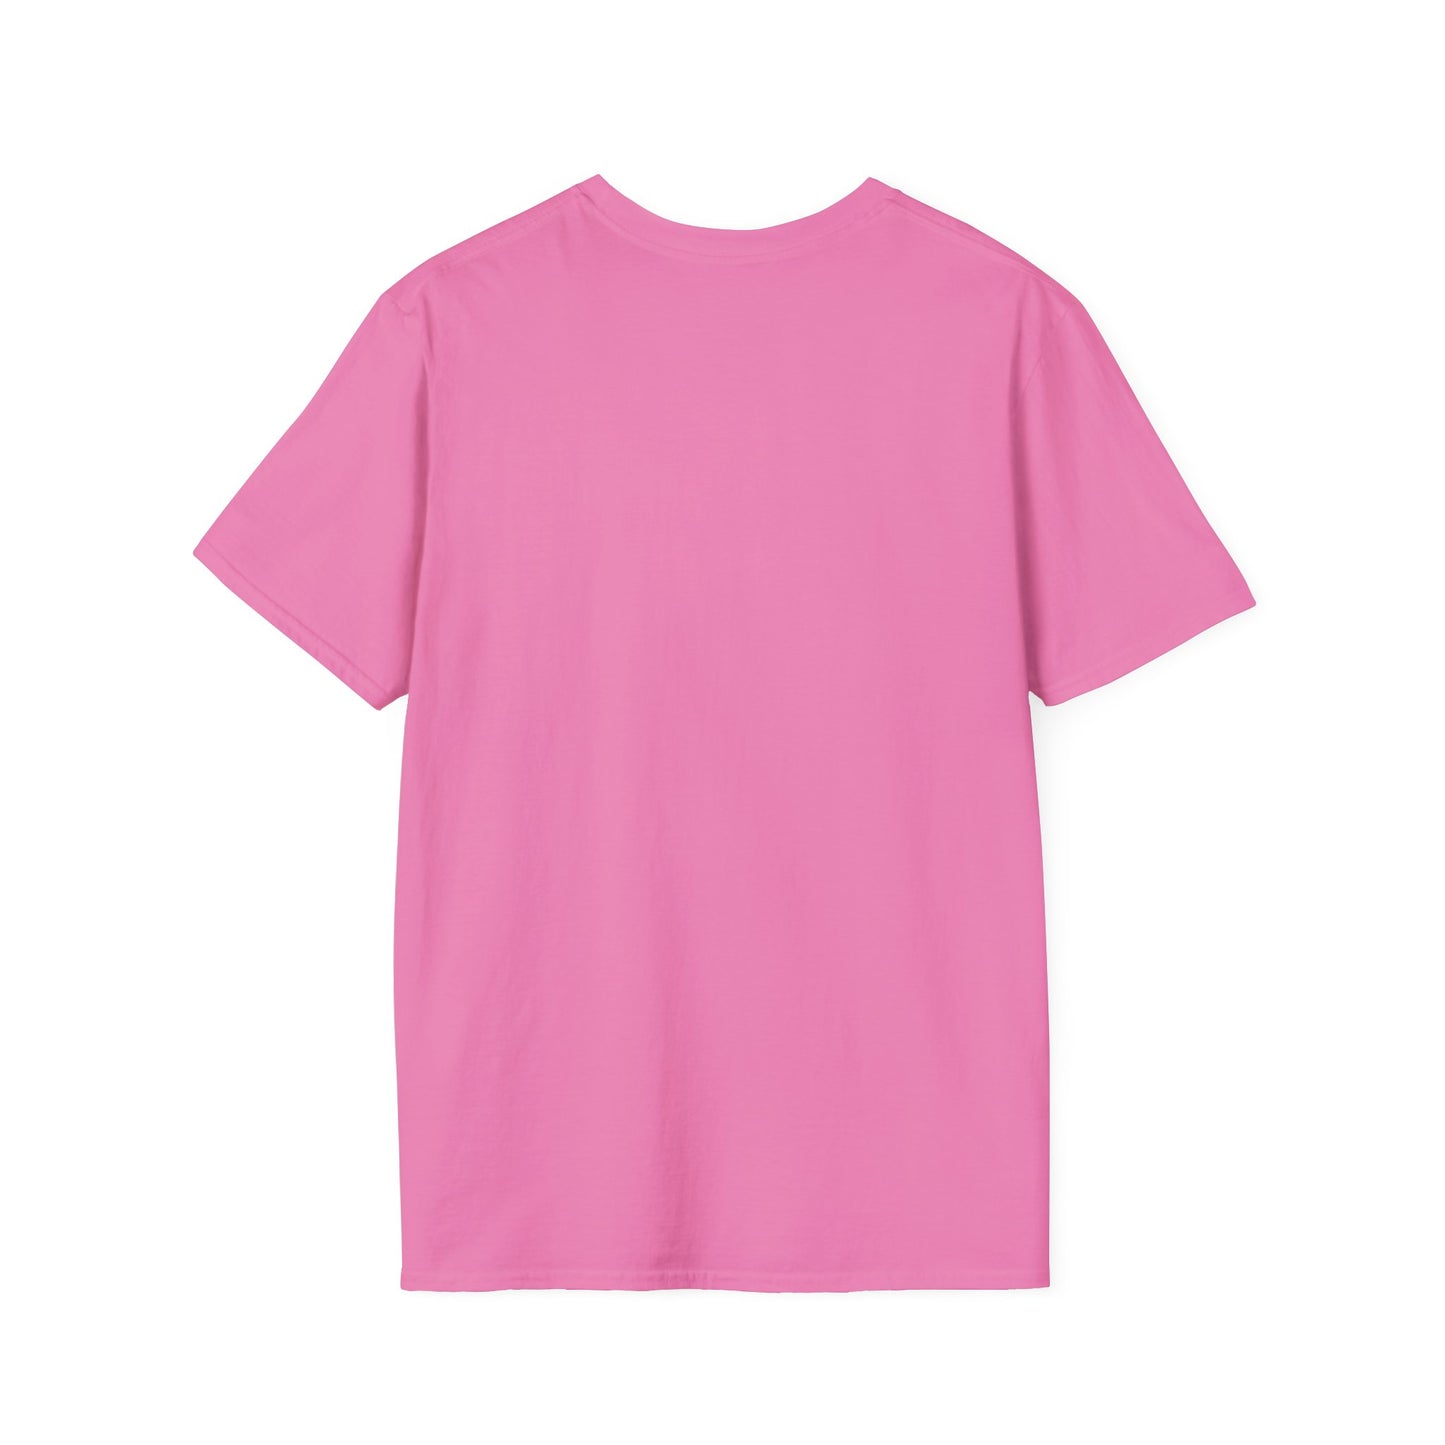 Catahoula PRIDE - Unisex Softstyle T-Shirt